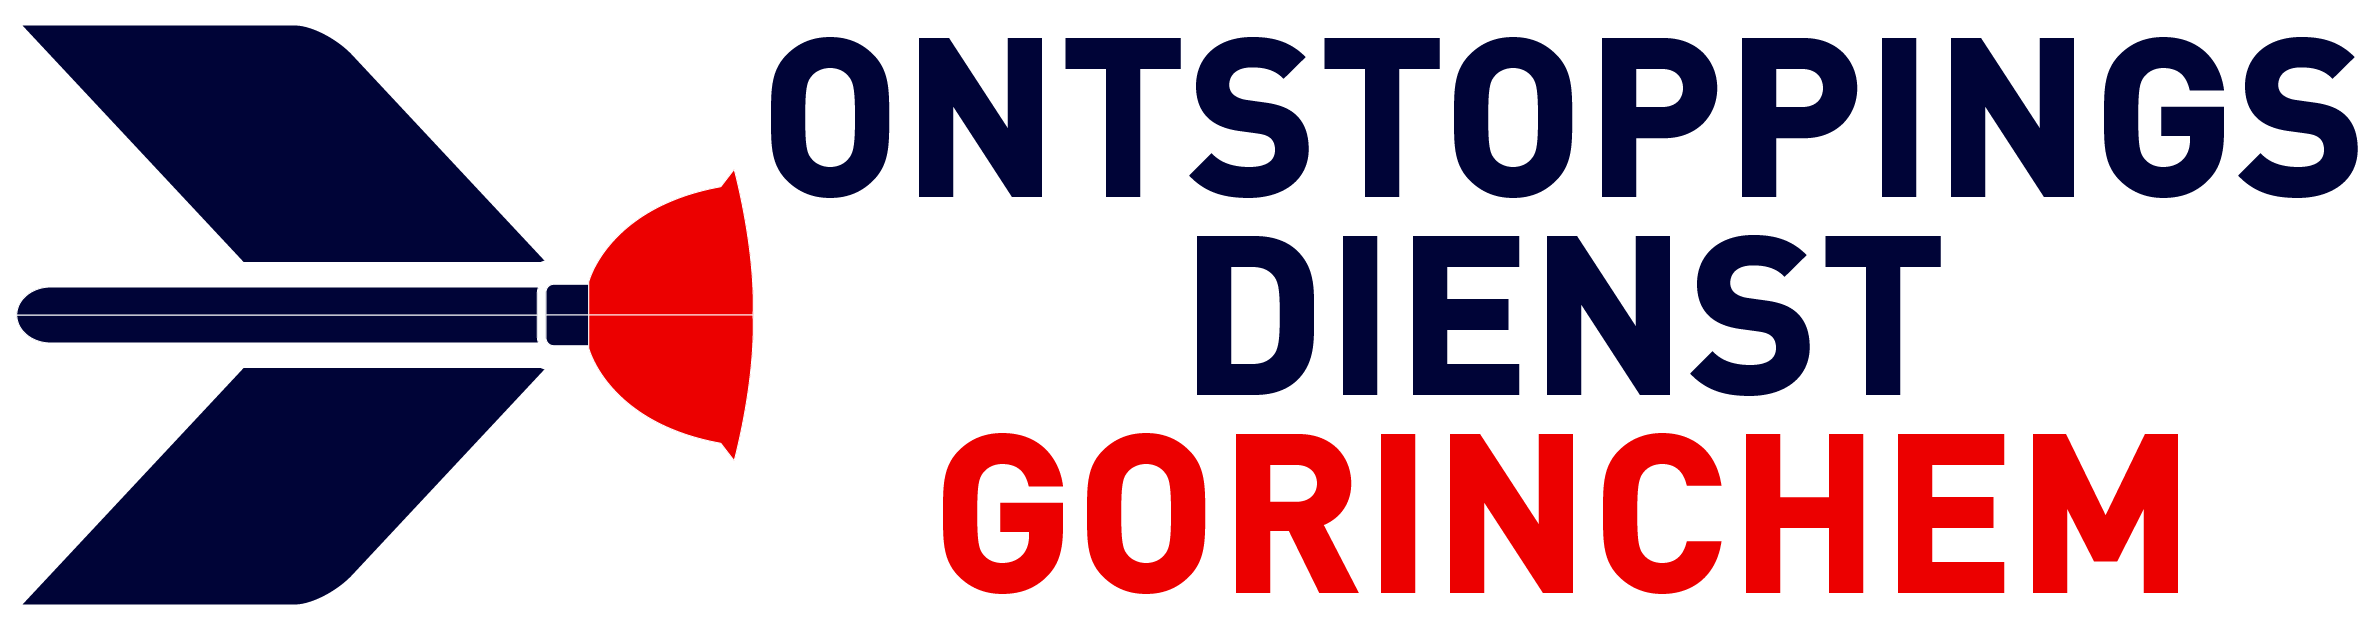 Ontstoppingsdienst Gorinchem logo